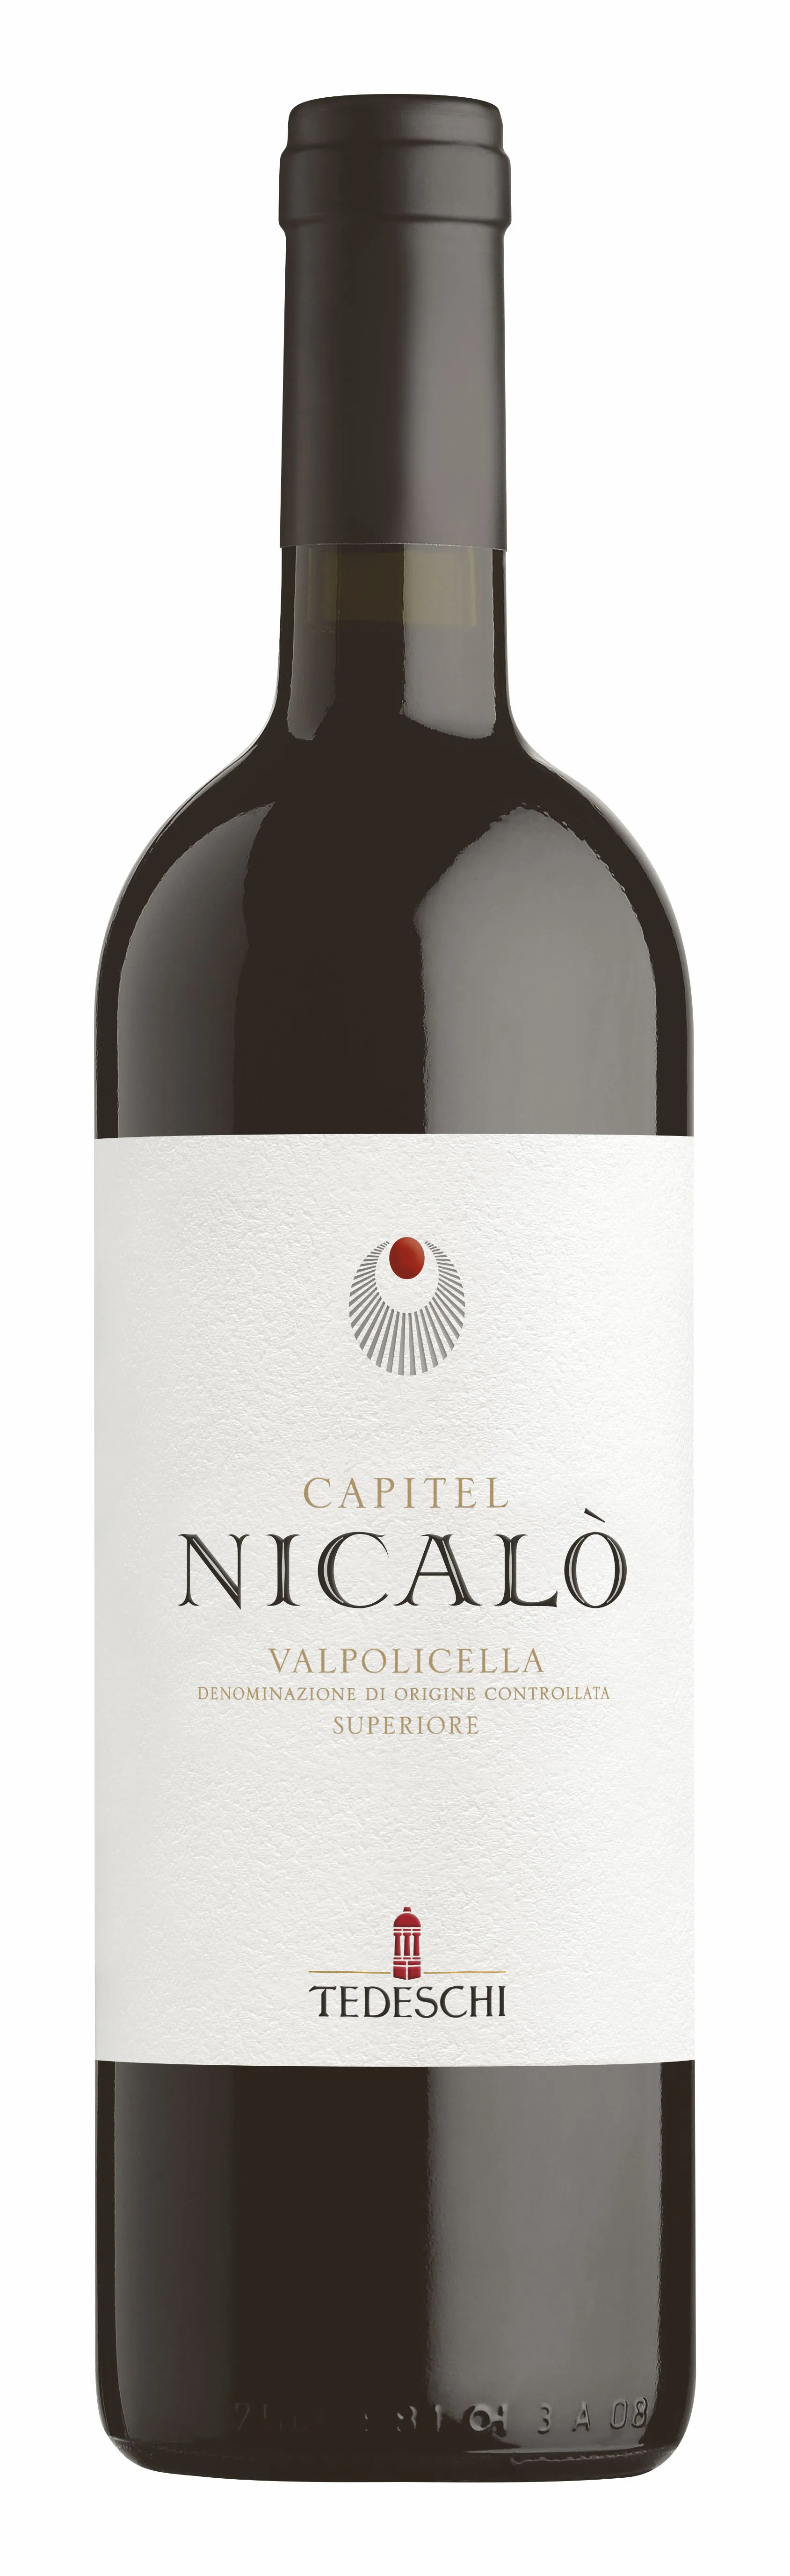 Bottle of Tedeschi Capitel Nicalò Valpolicella Superiore from search results